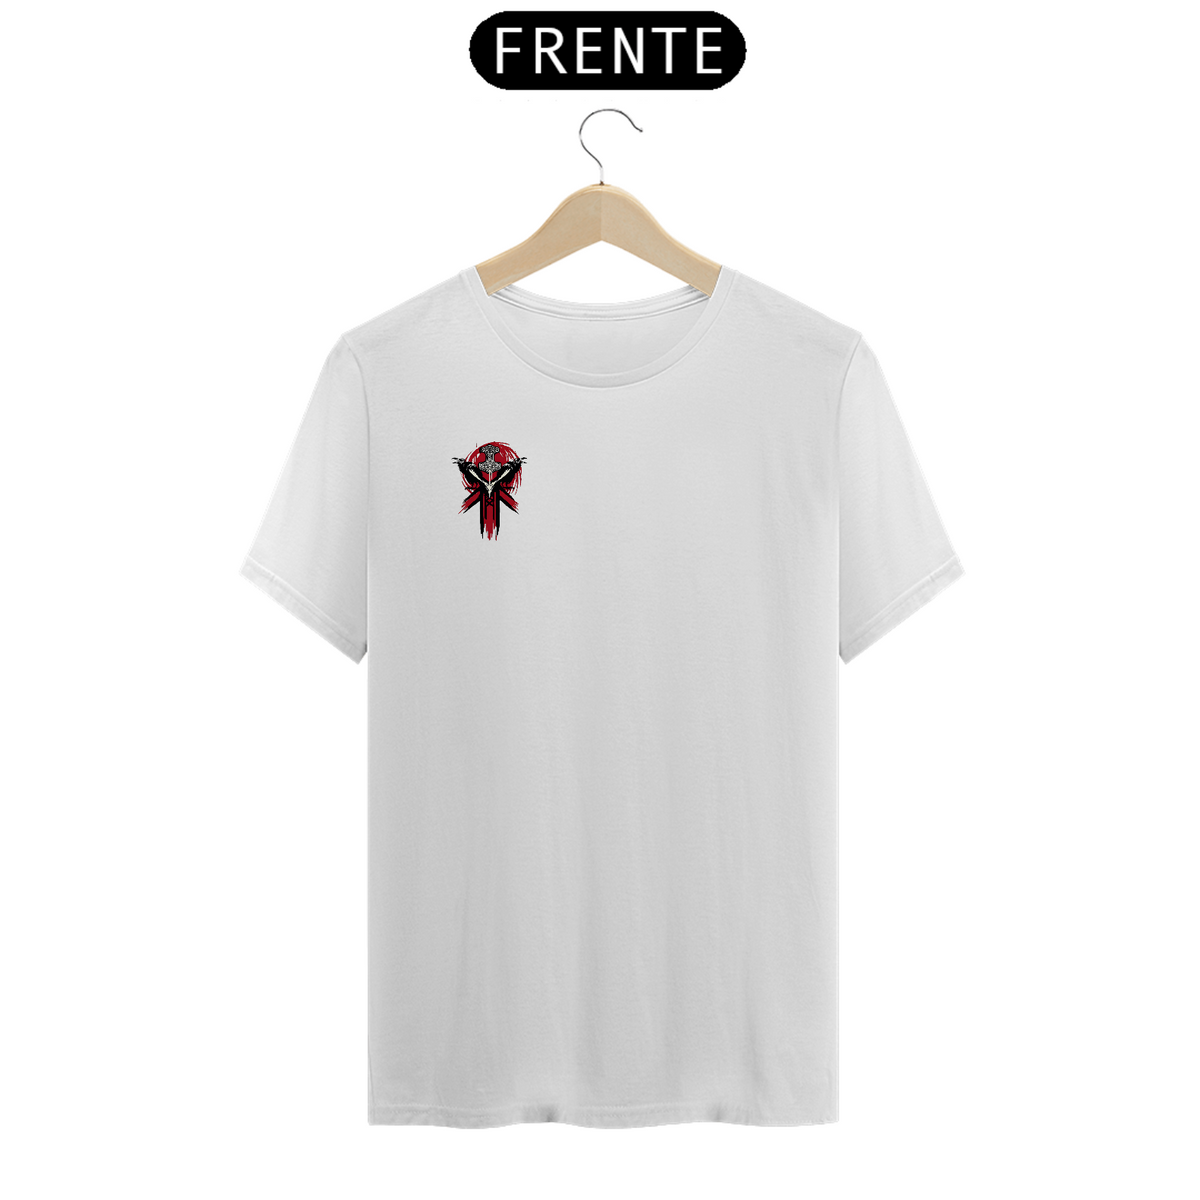 Nome do produto: Camiseta - Crows in the rune - Minimalista